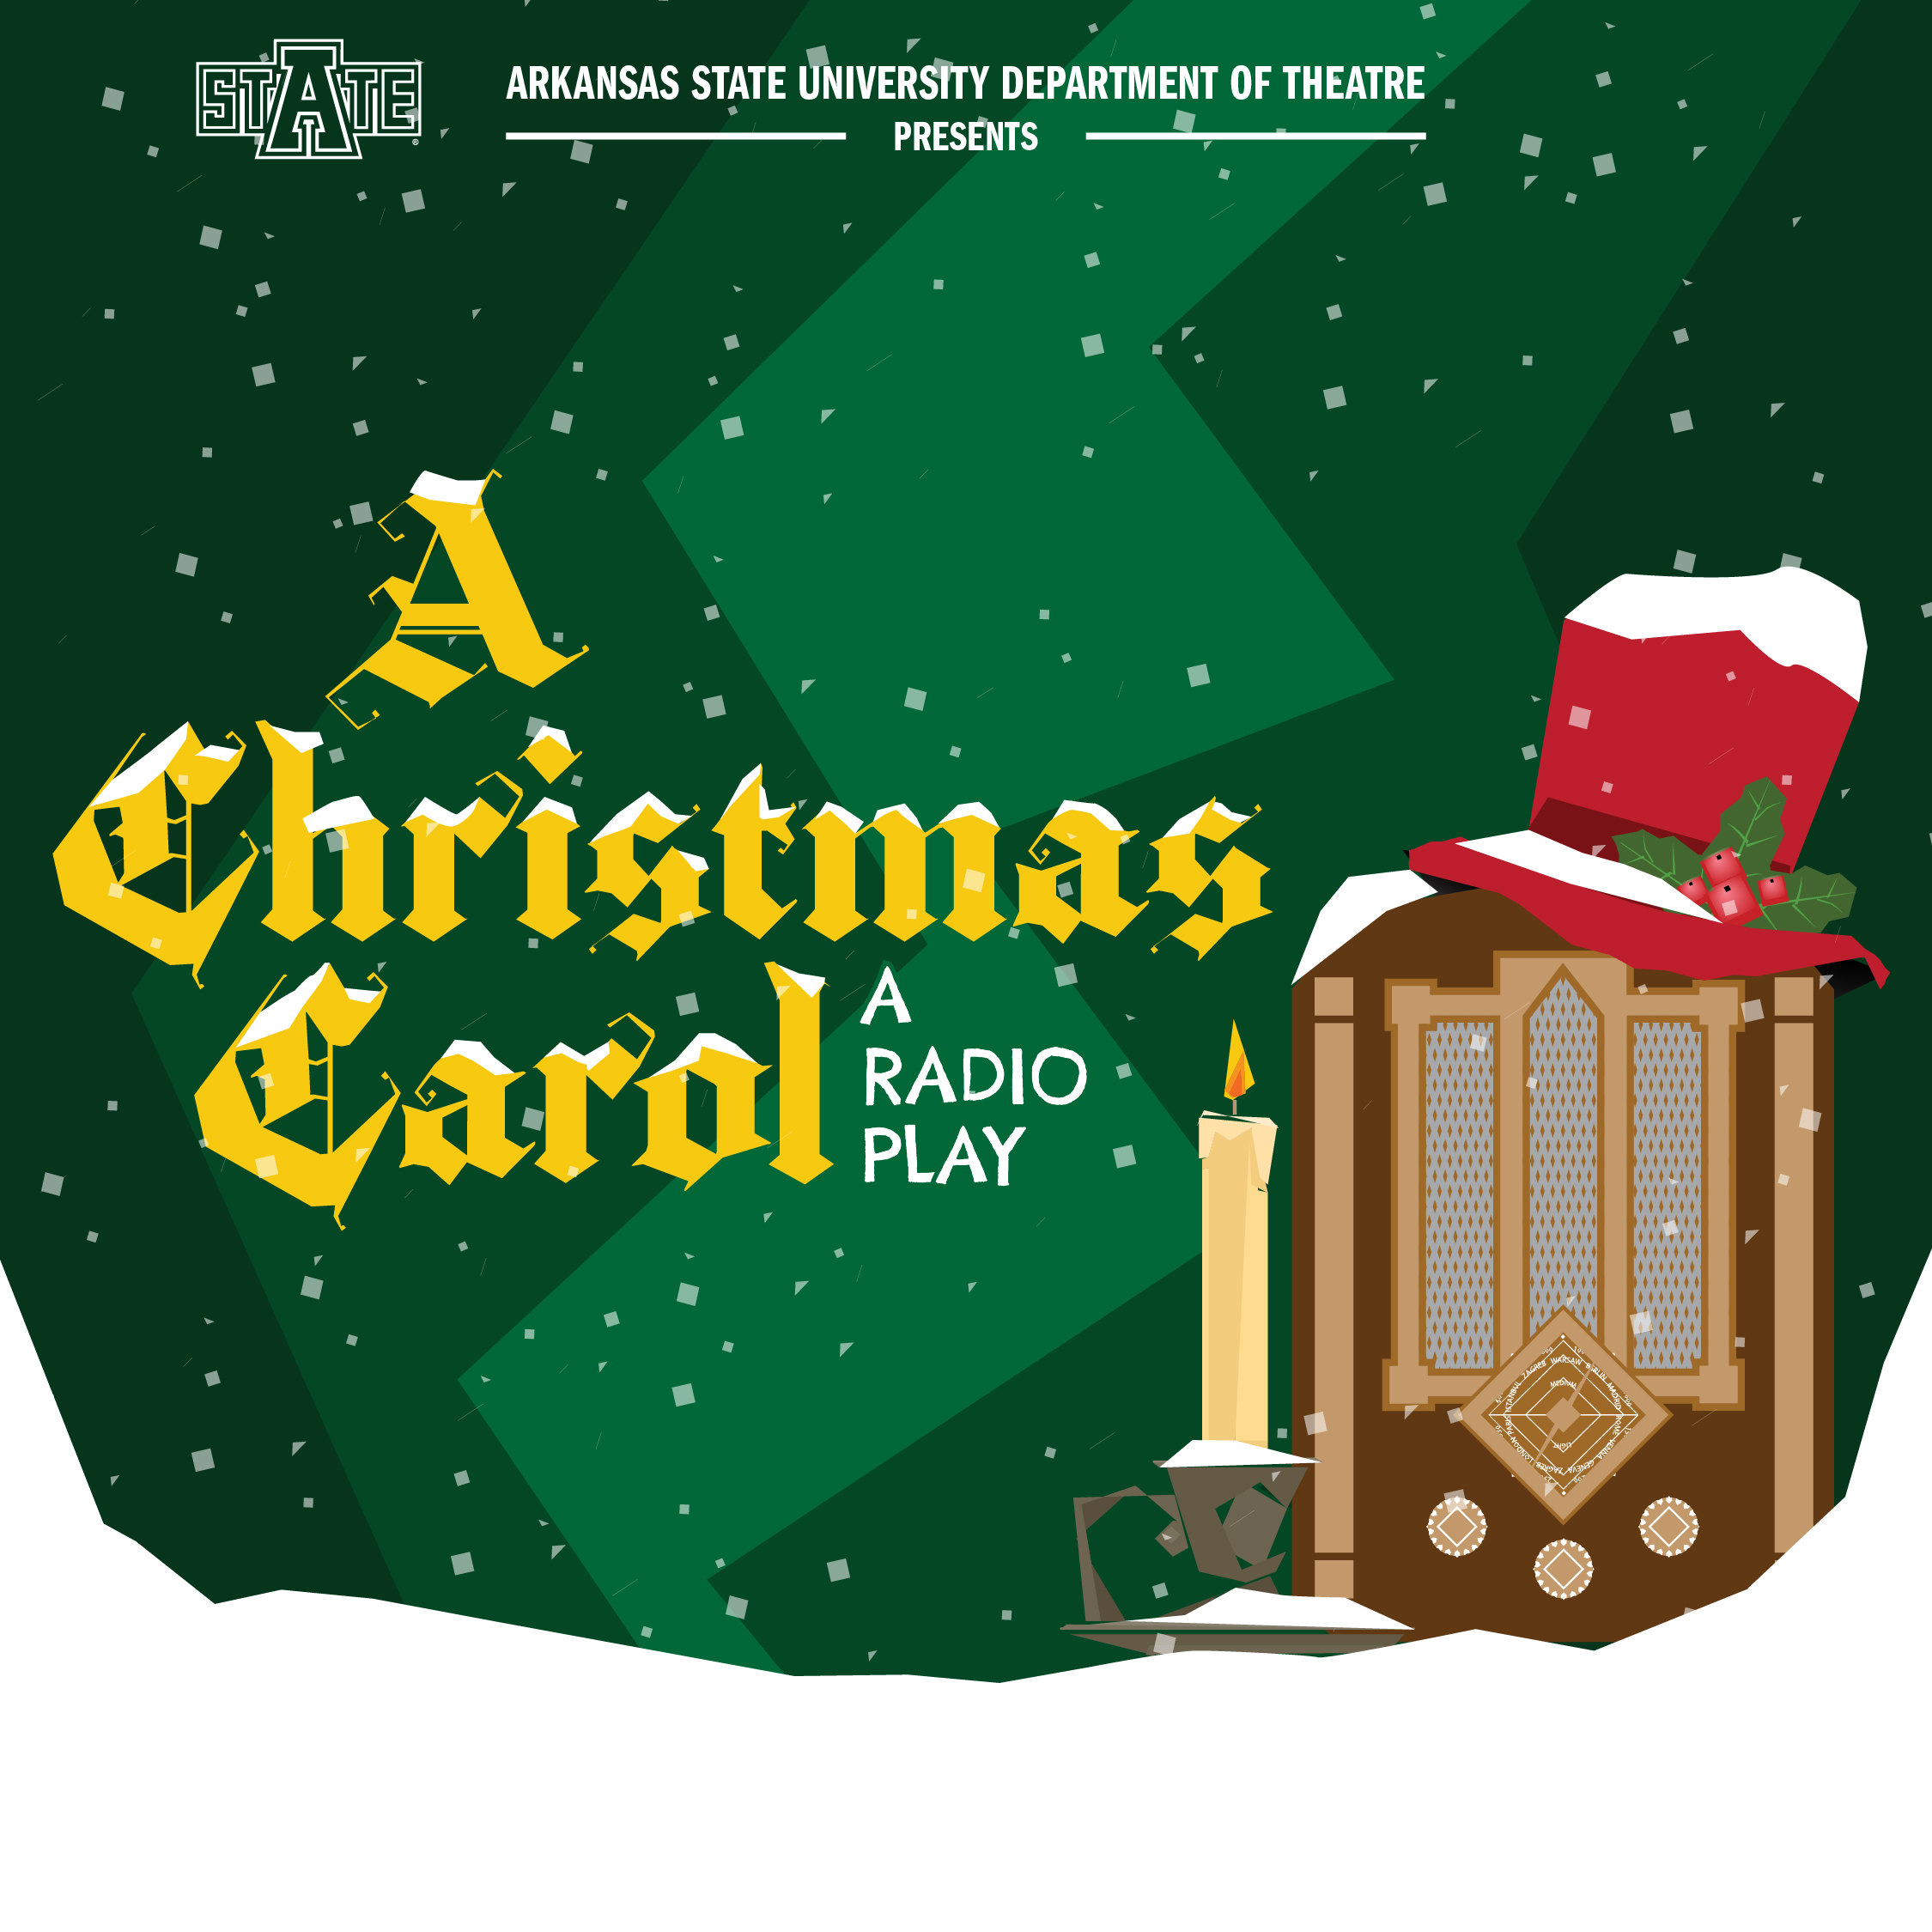 A Christmas Carol: A Radio Play